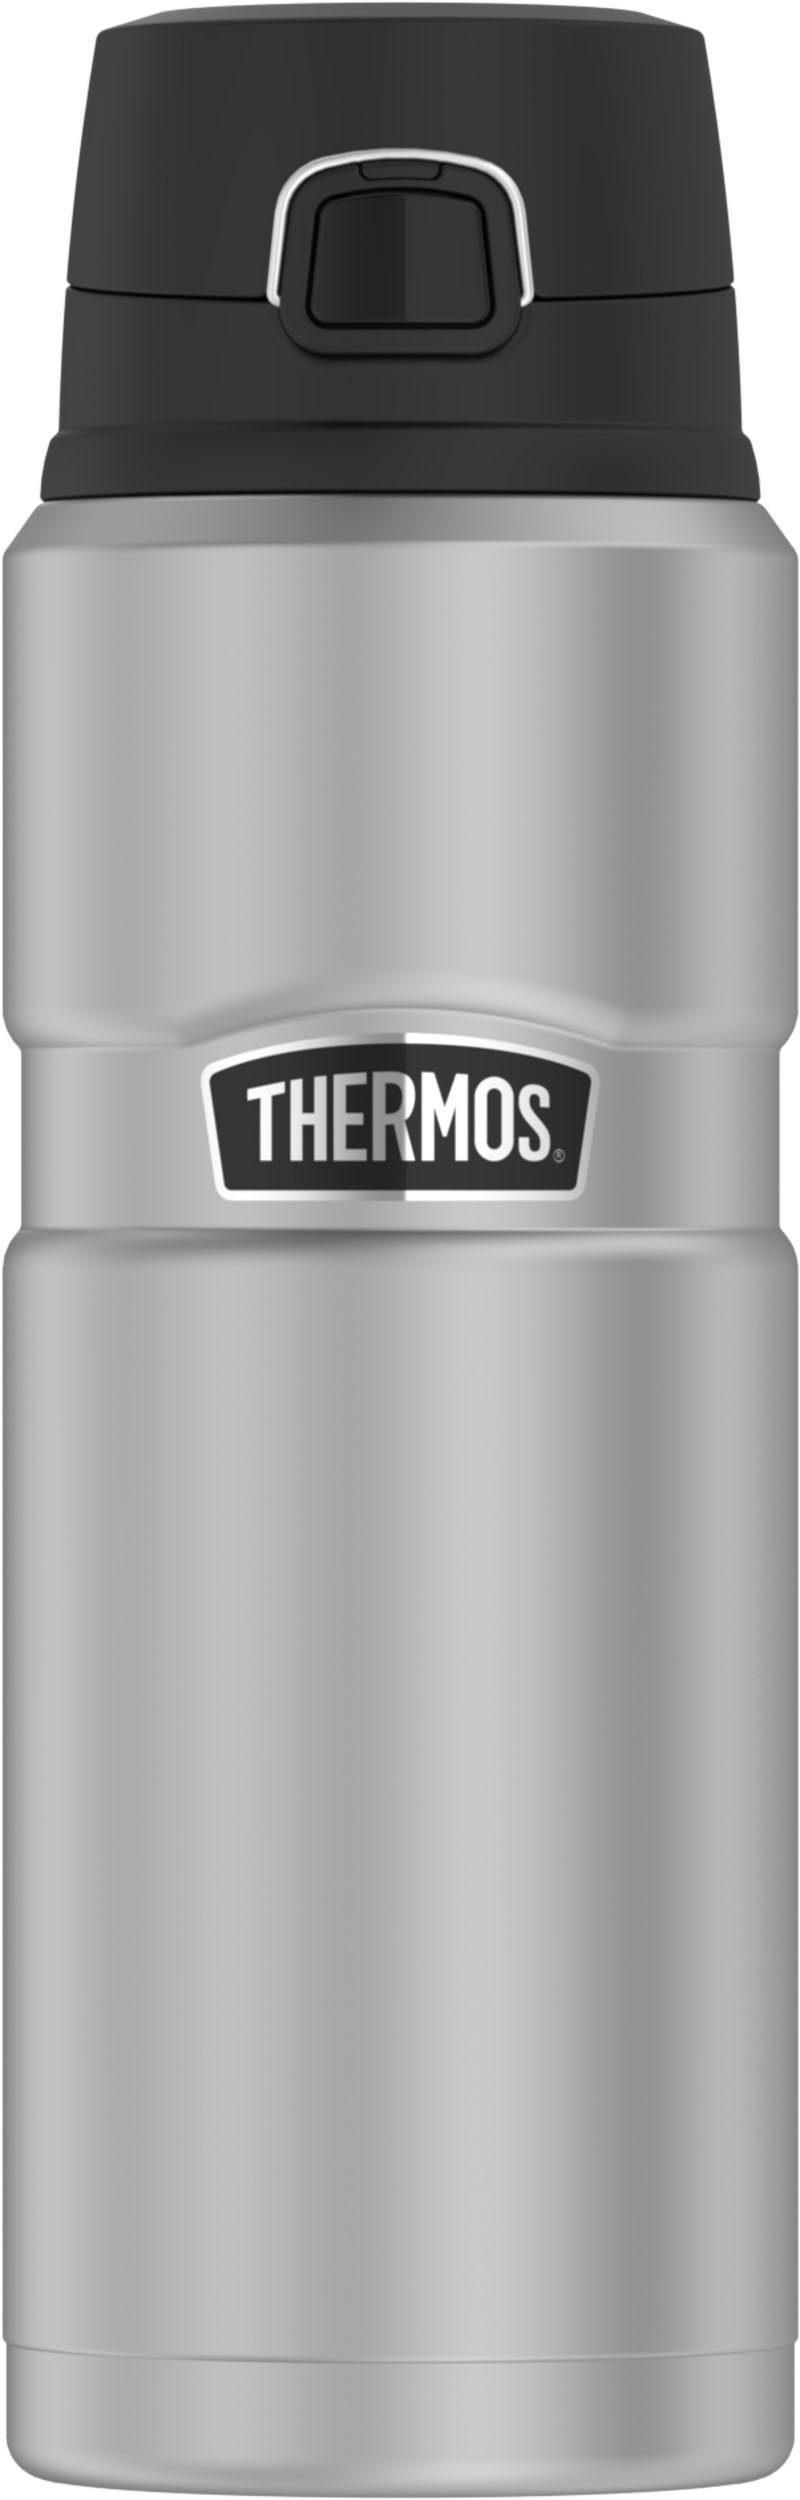 THERMOS Thermoflasche 0,7 Liter silberfarben Stainless Edelstahl, King